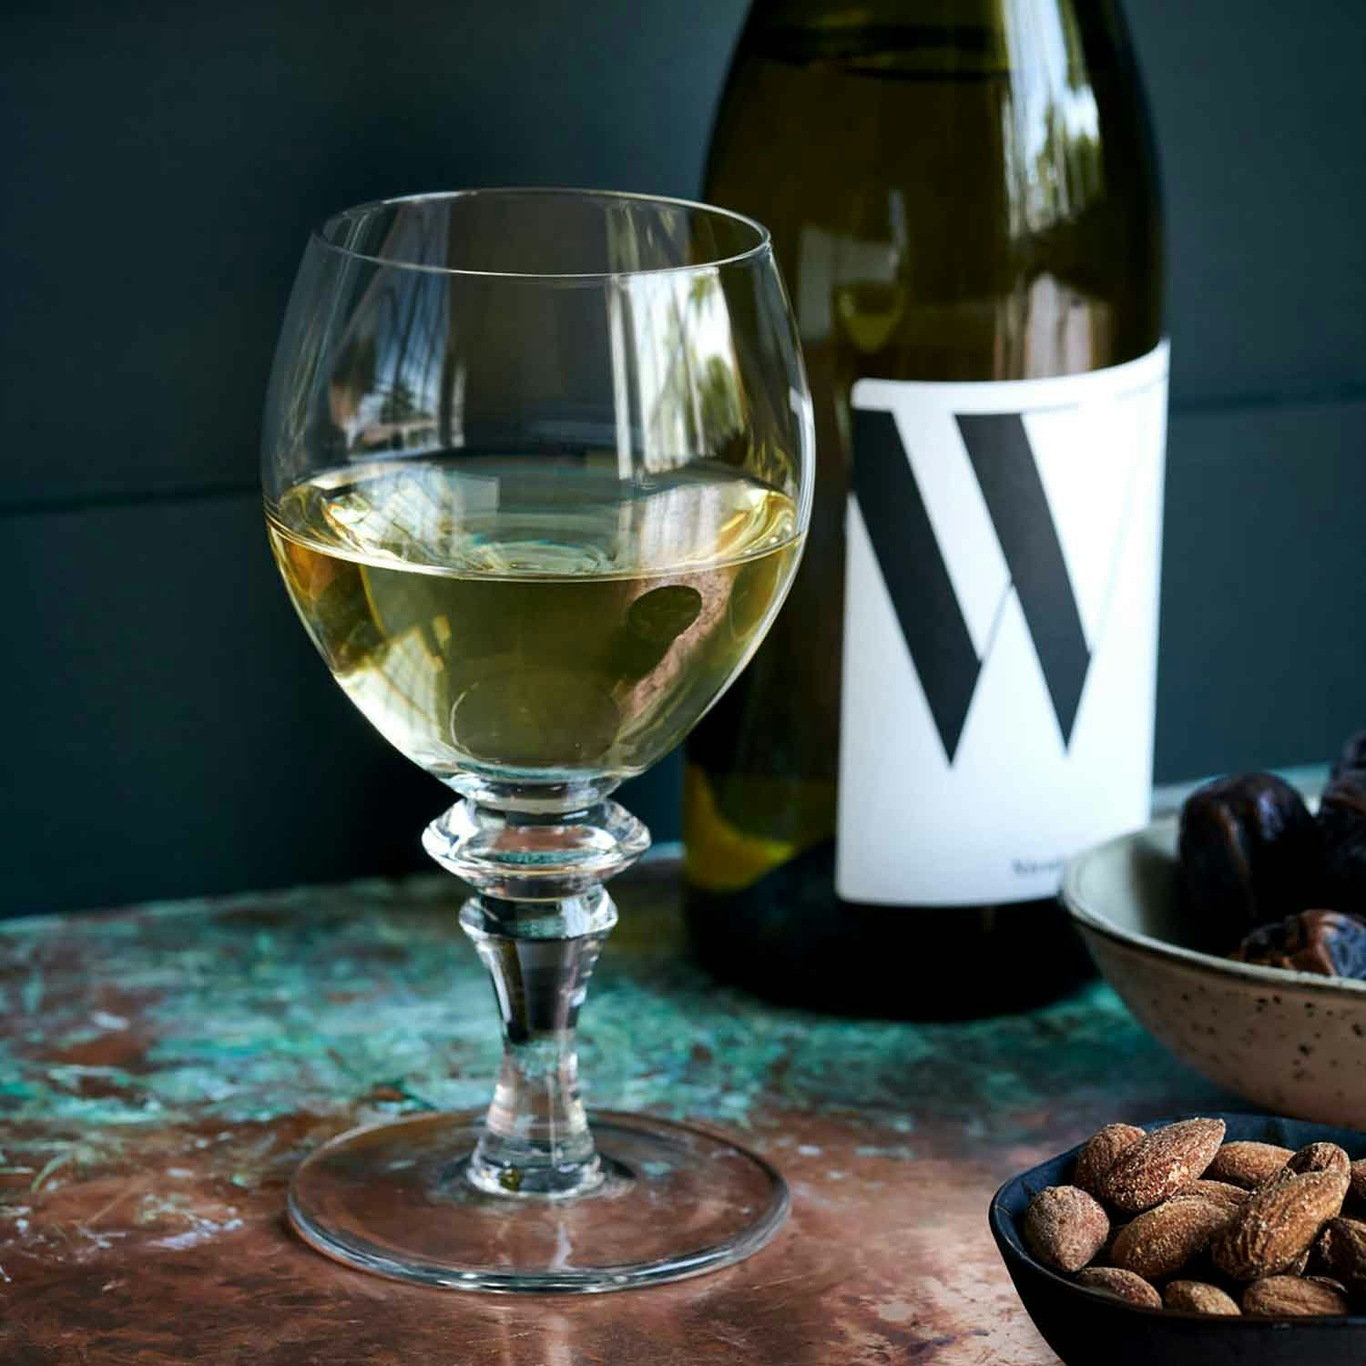 Style White Wine Glass, Set of 4, 44 cl - Spiegelau @ RoyalDesign